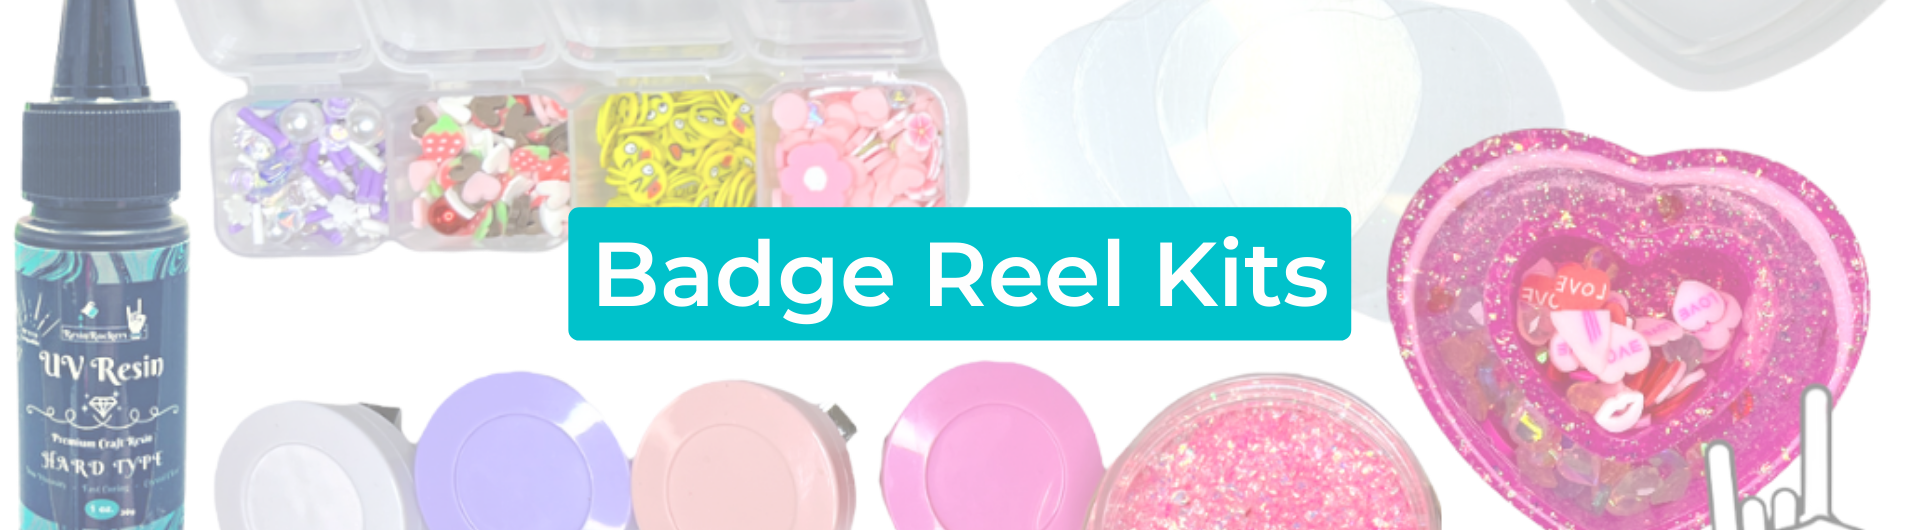 Badge Reel Kits  Resin Molds and Glitter